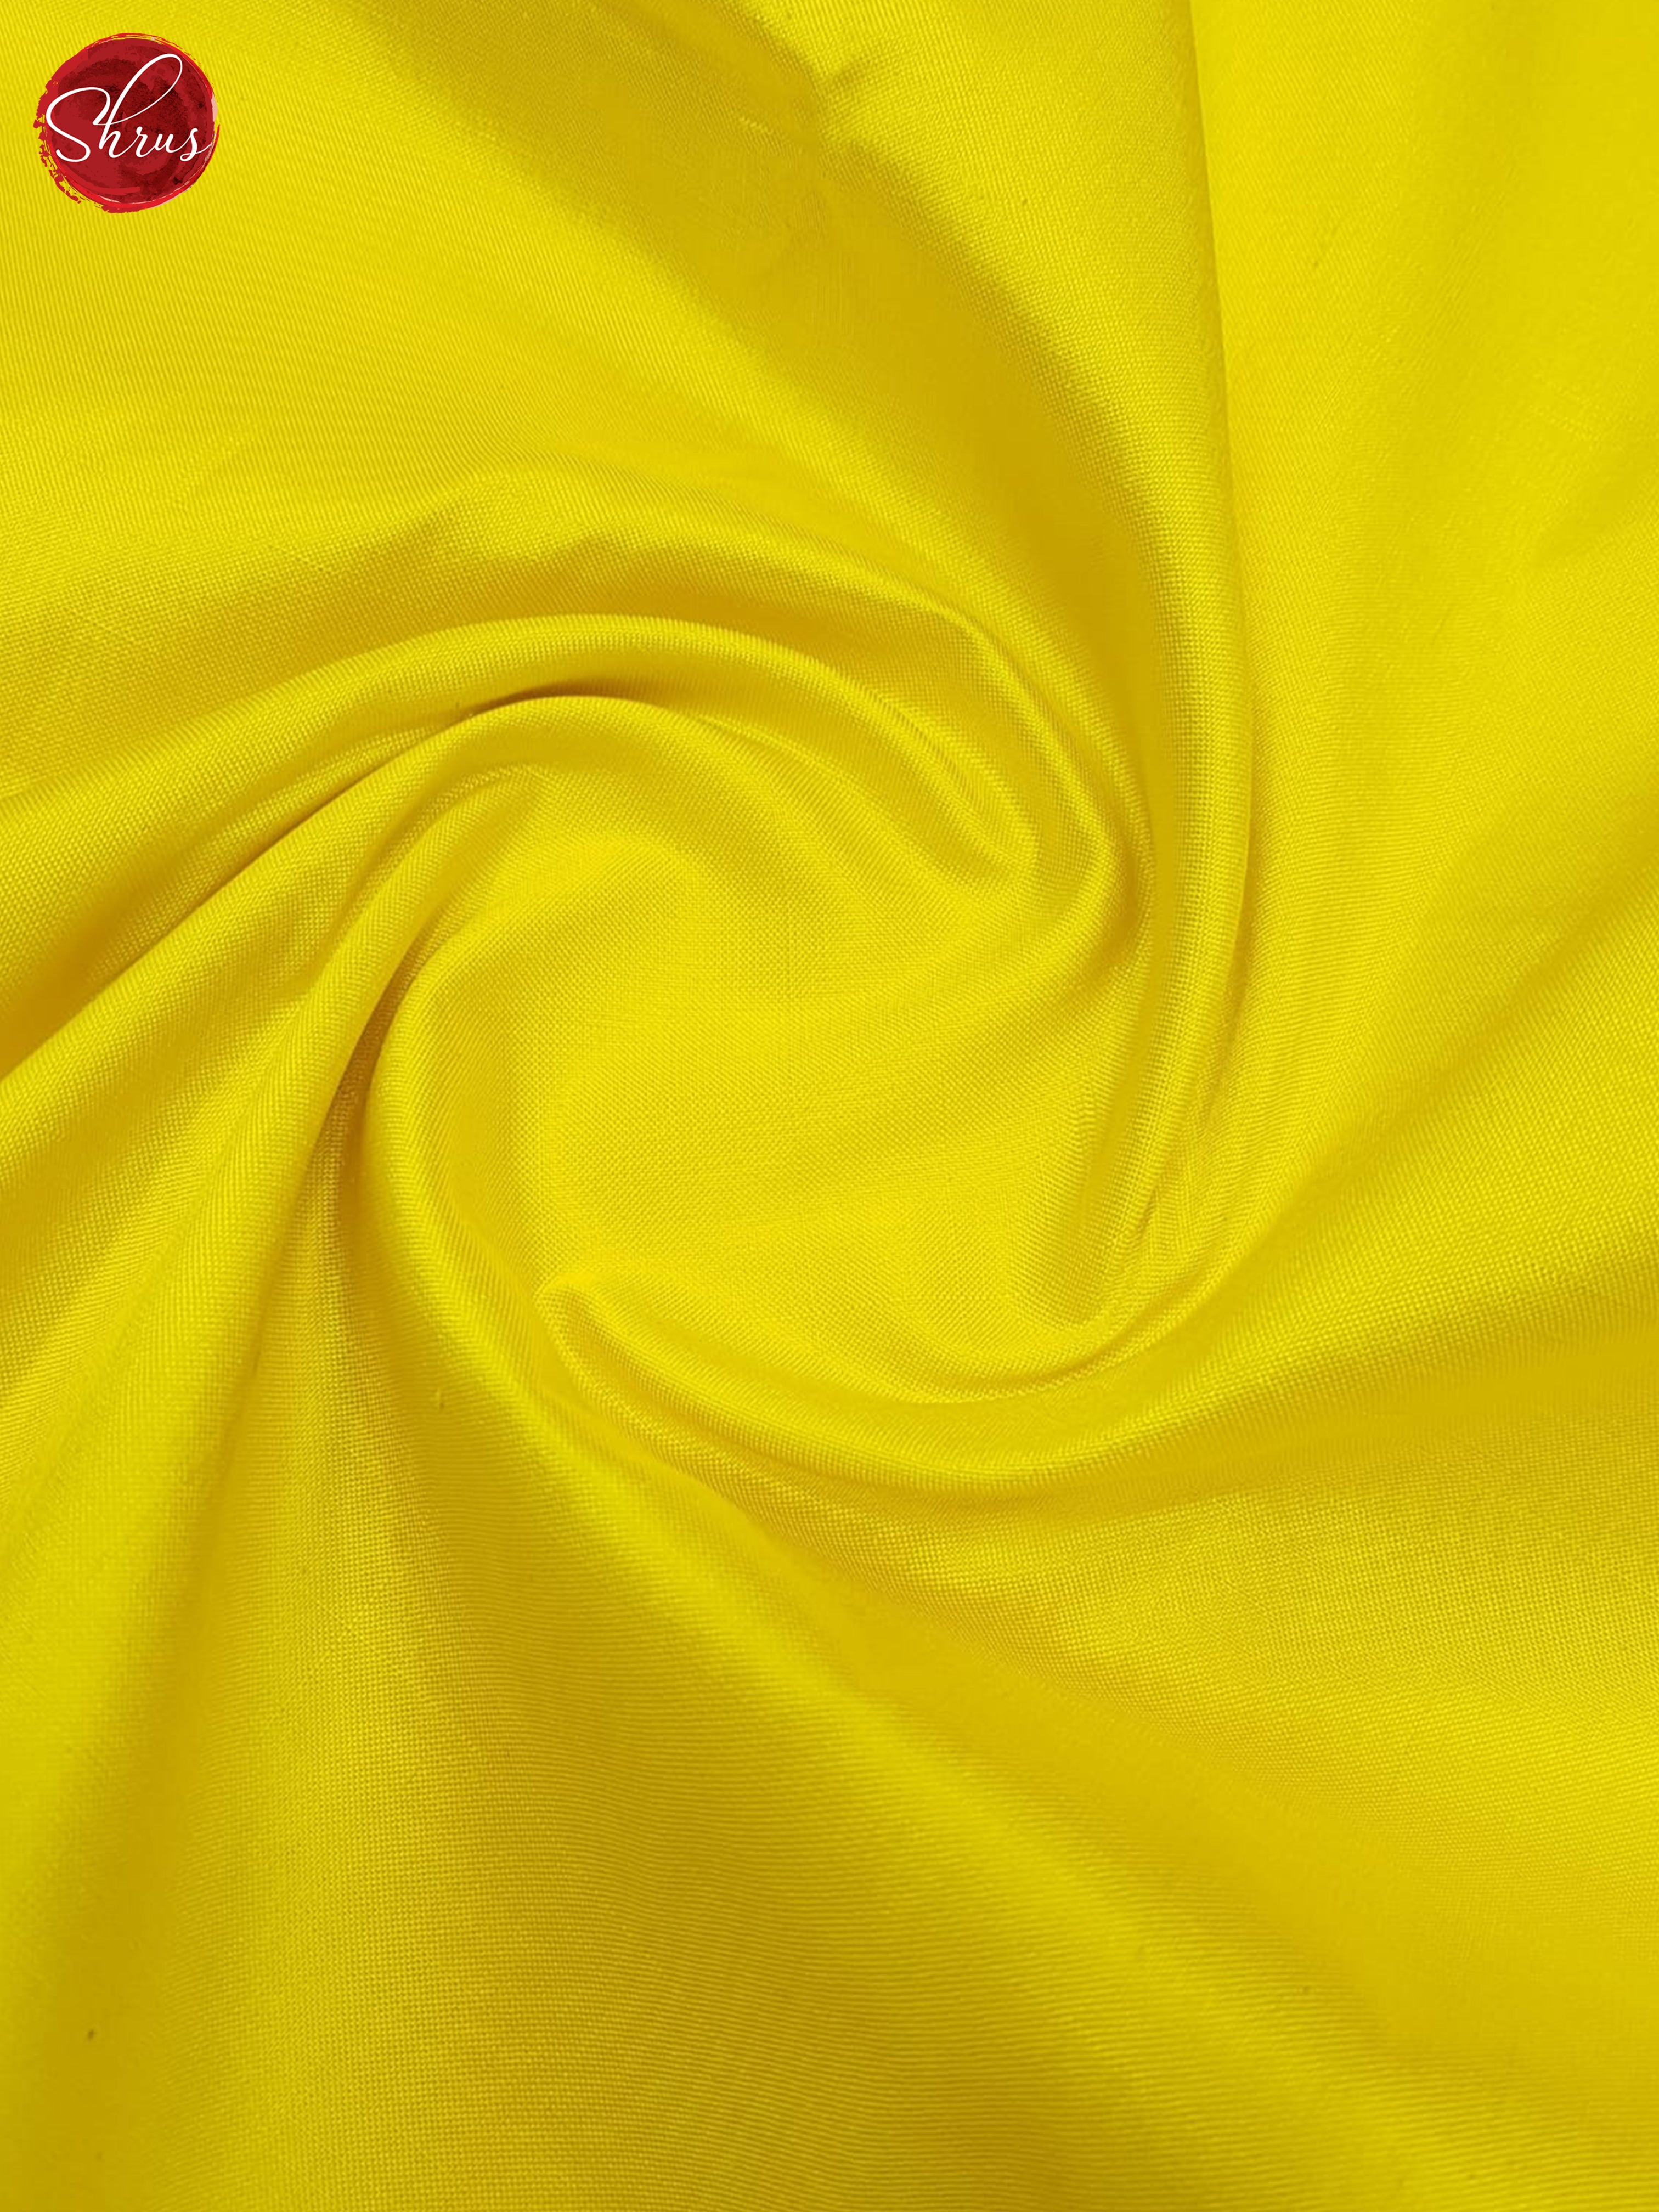 Yellow And Purple - Shop on ShrusEternity.com